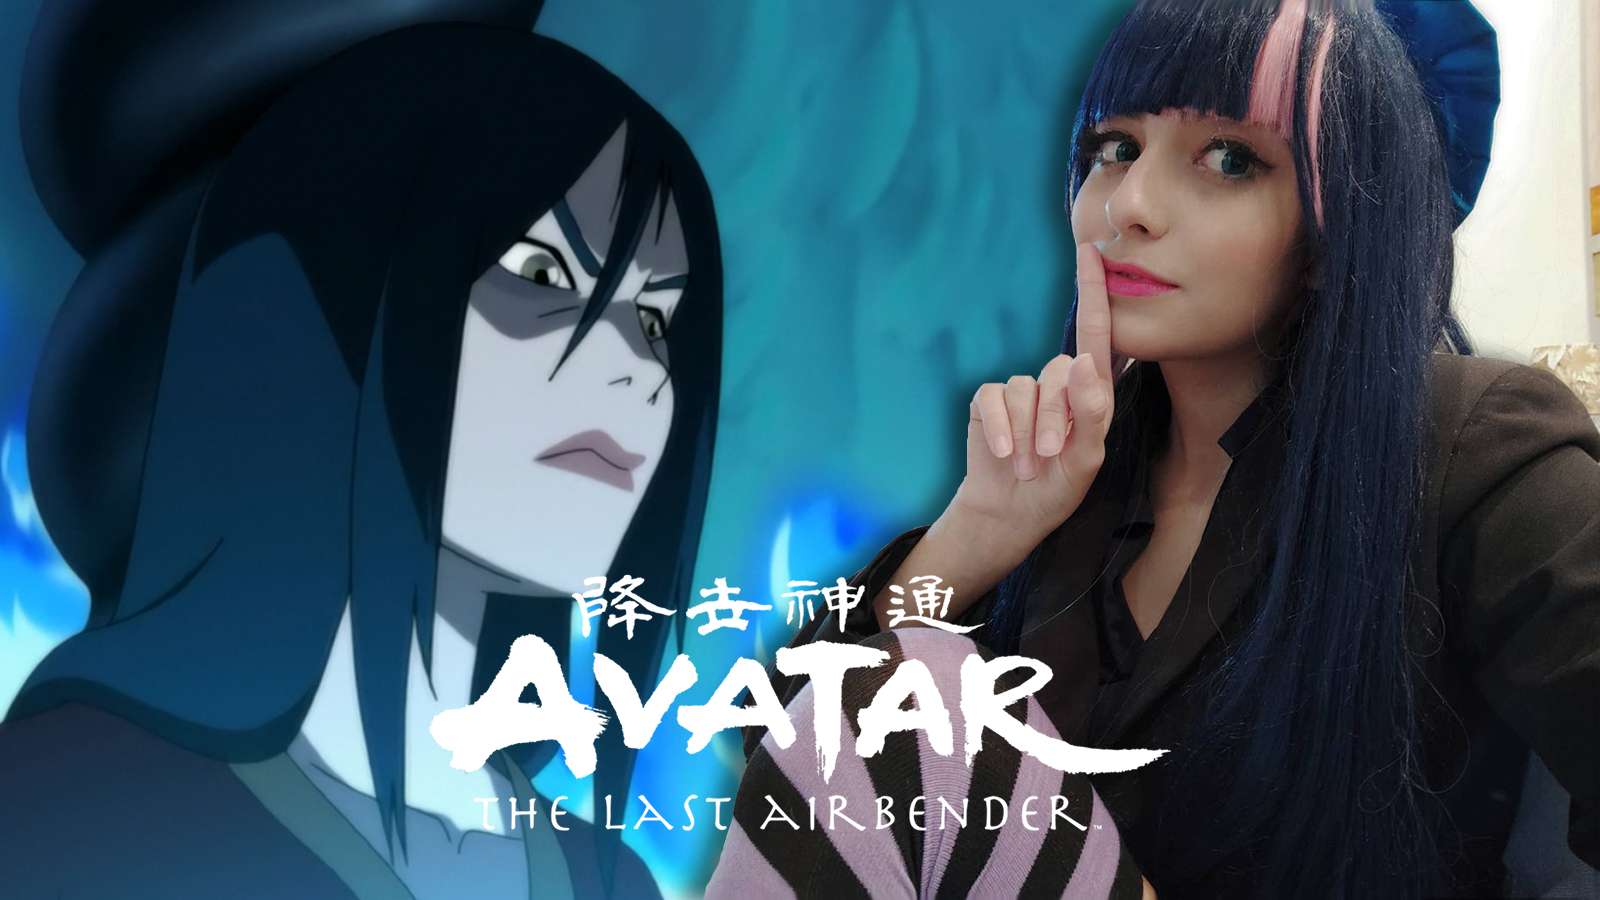 Avatar: The Last Airbender Princess Azula cosplay